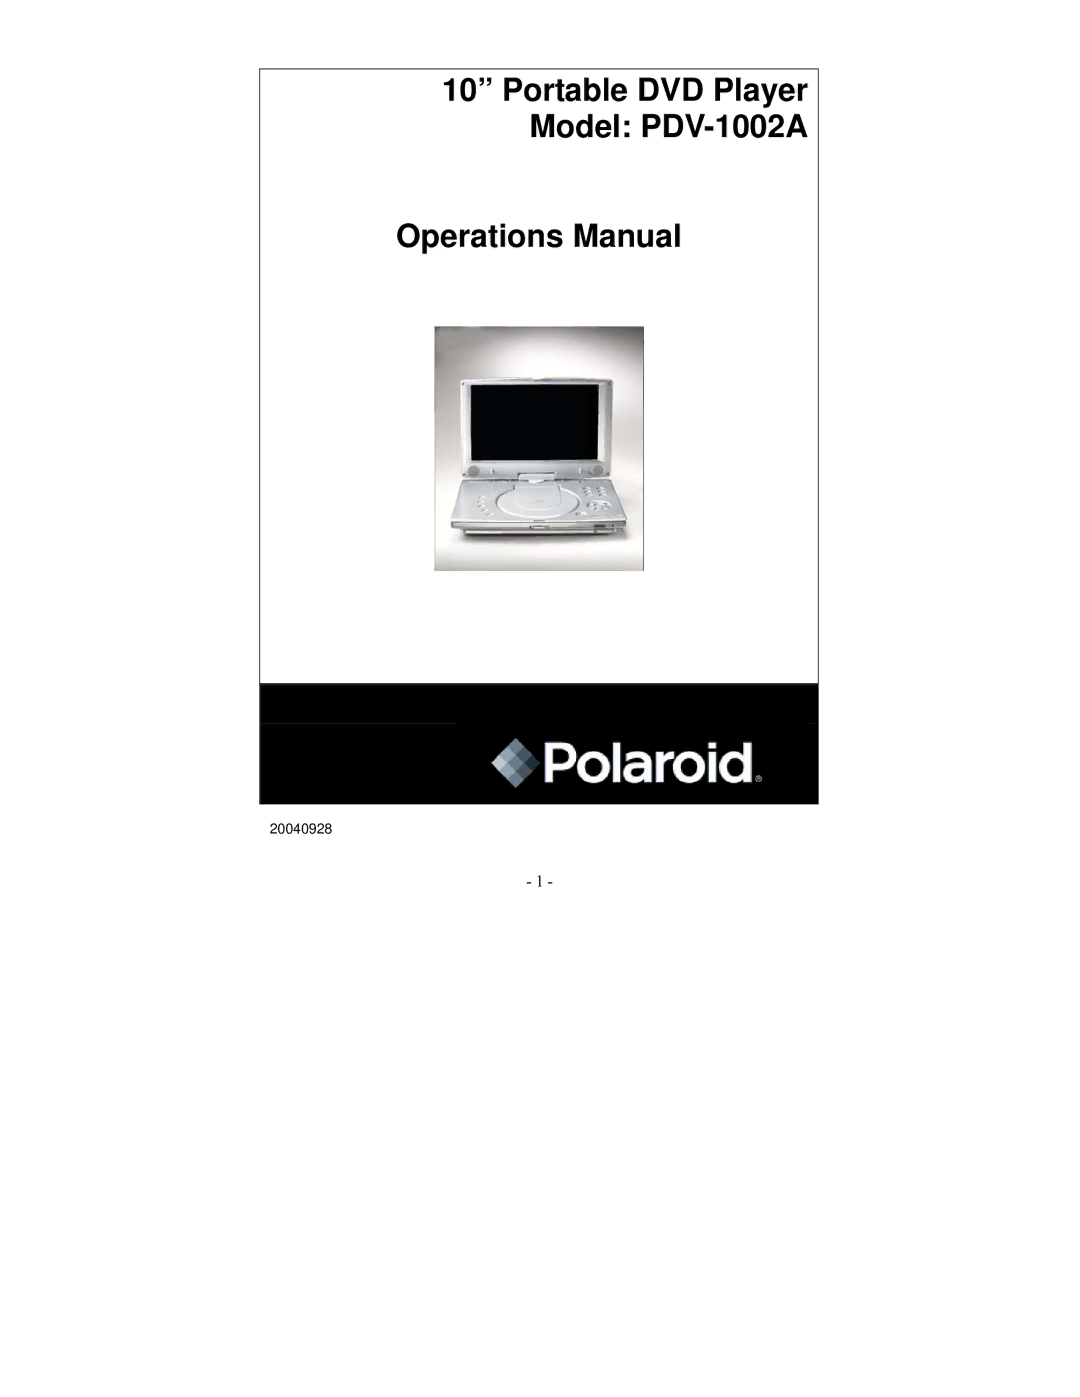 Polaroid manual Portable DVD Player Model PDV-1002A Operations Manual 